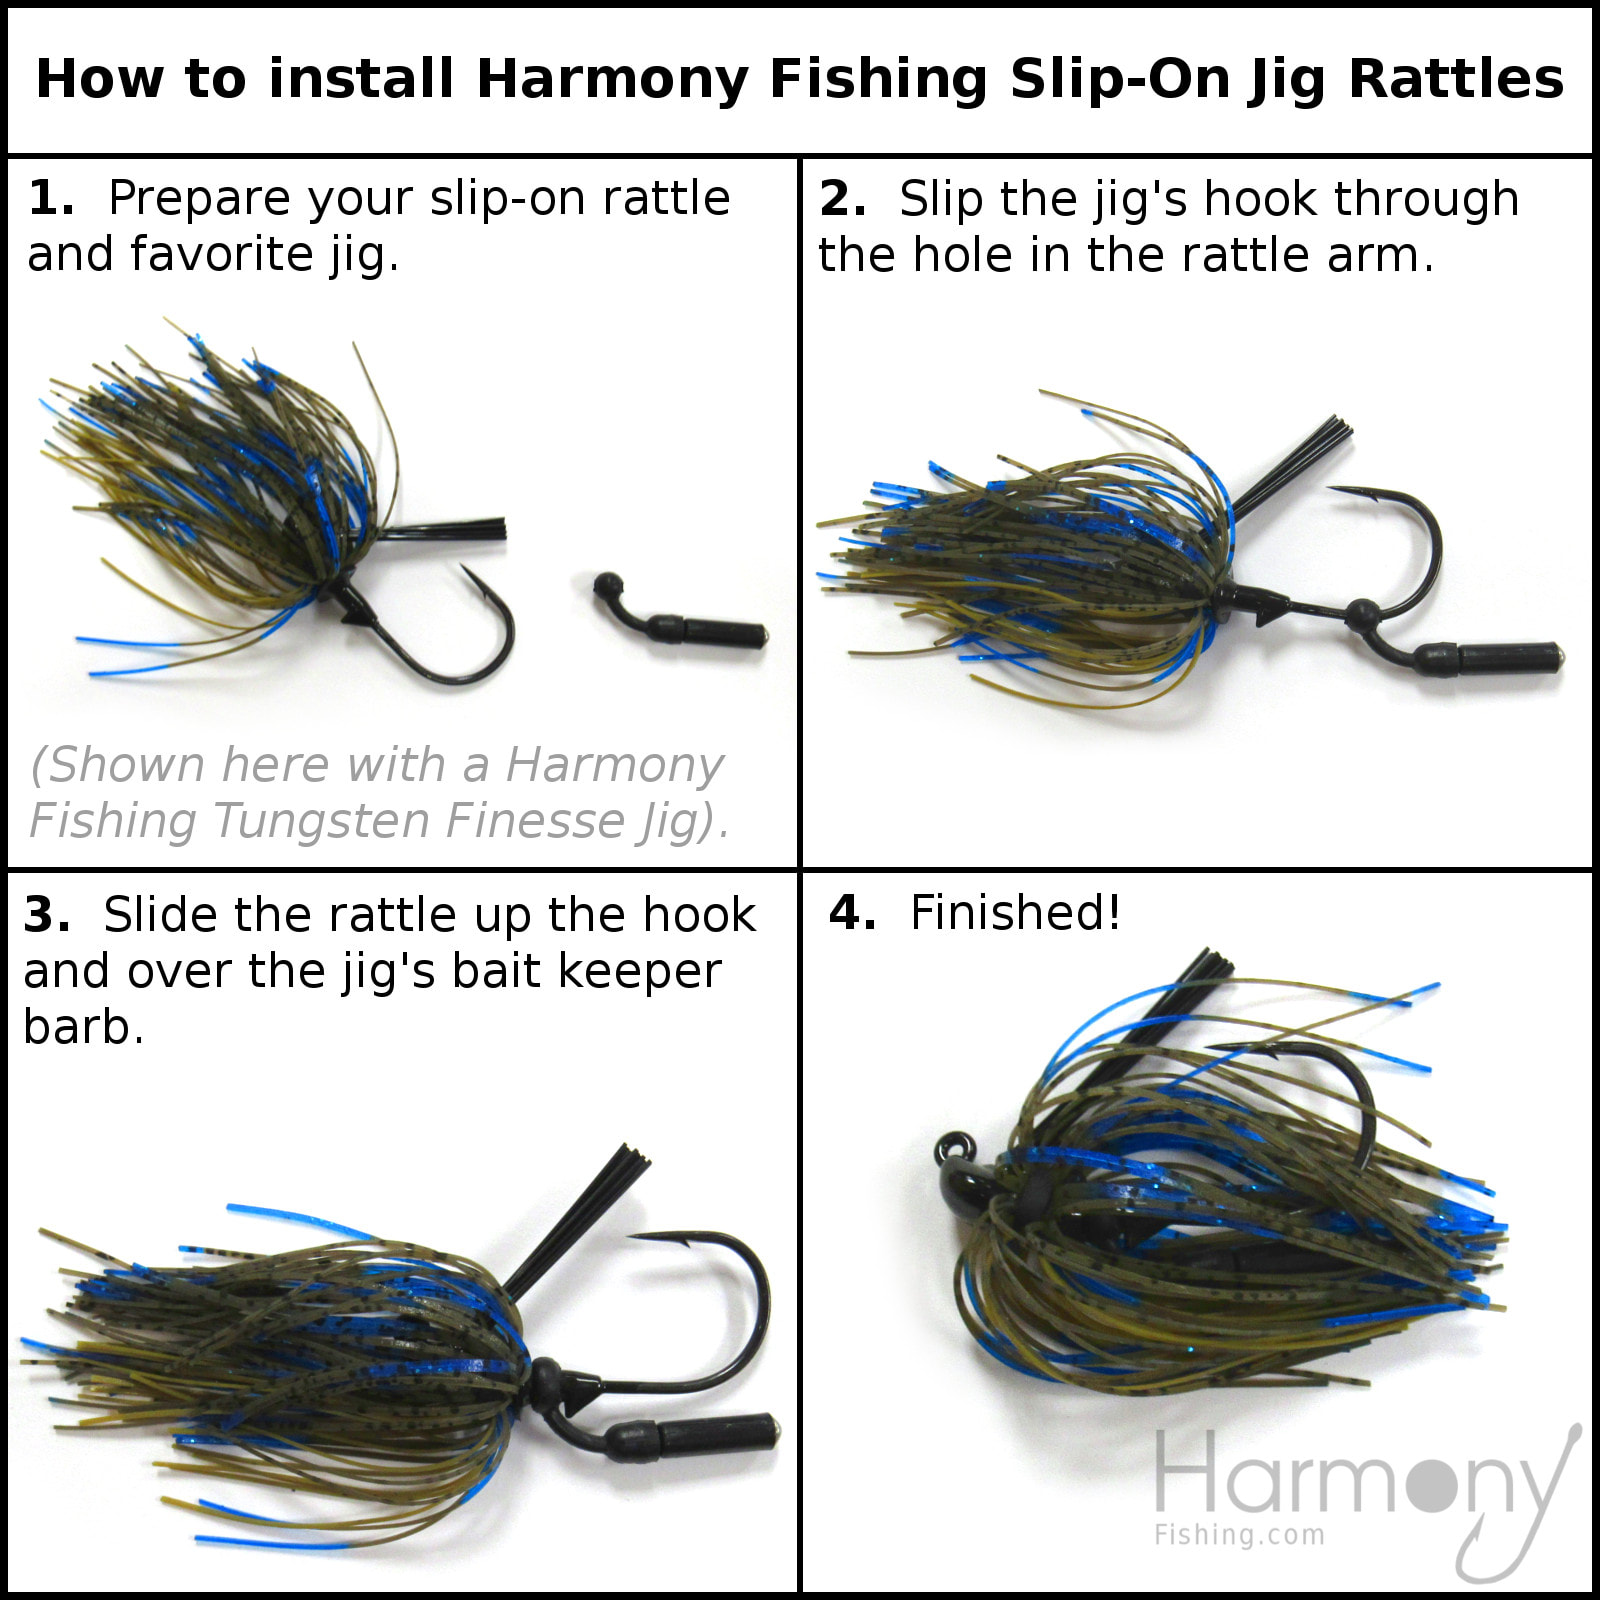 Harmony Fishing - Slip-On Low Profile Jig Rattles (10 Pack)